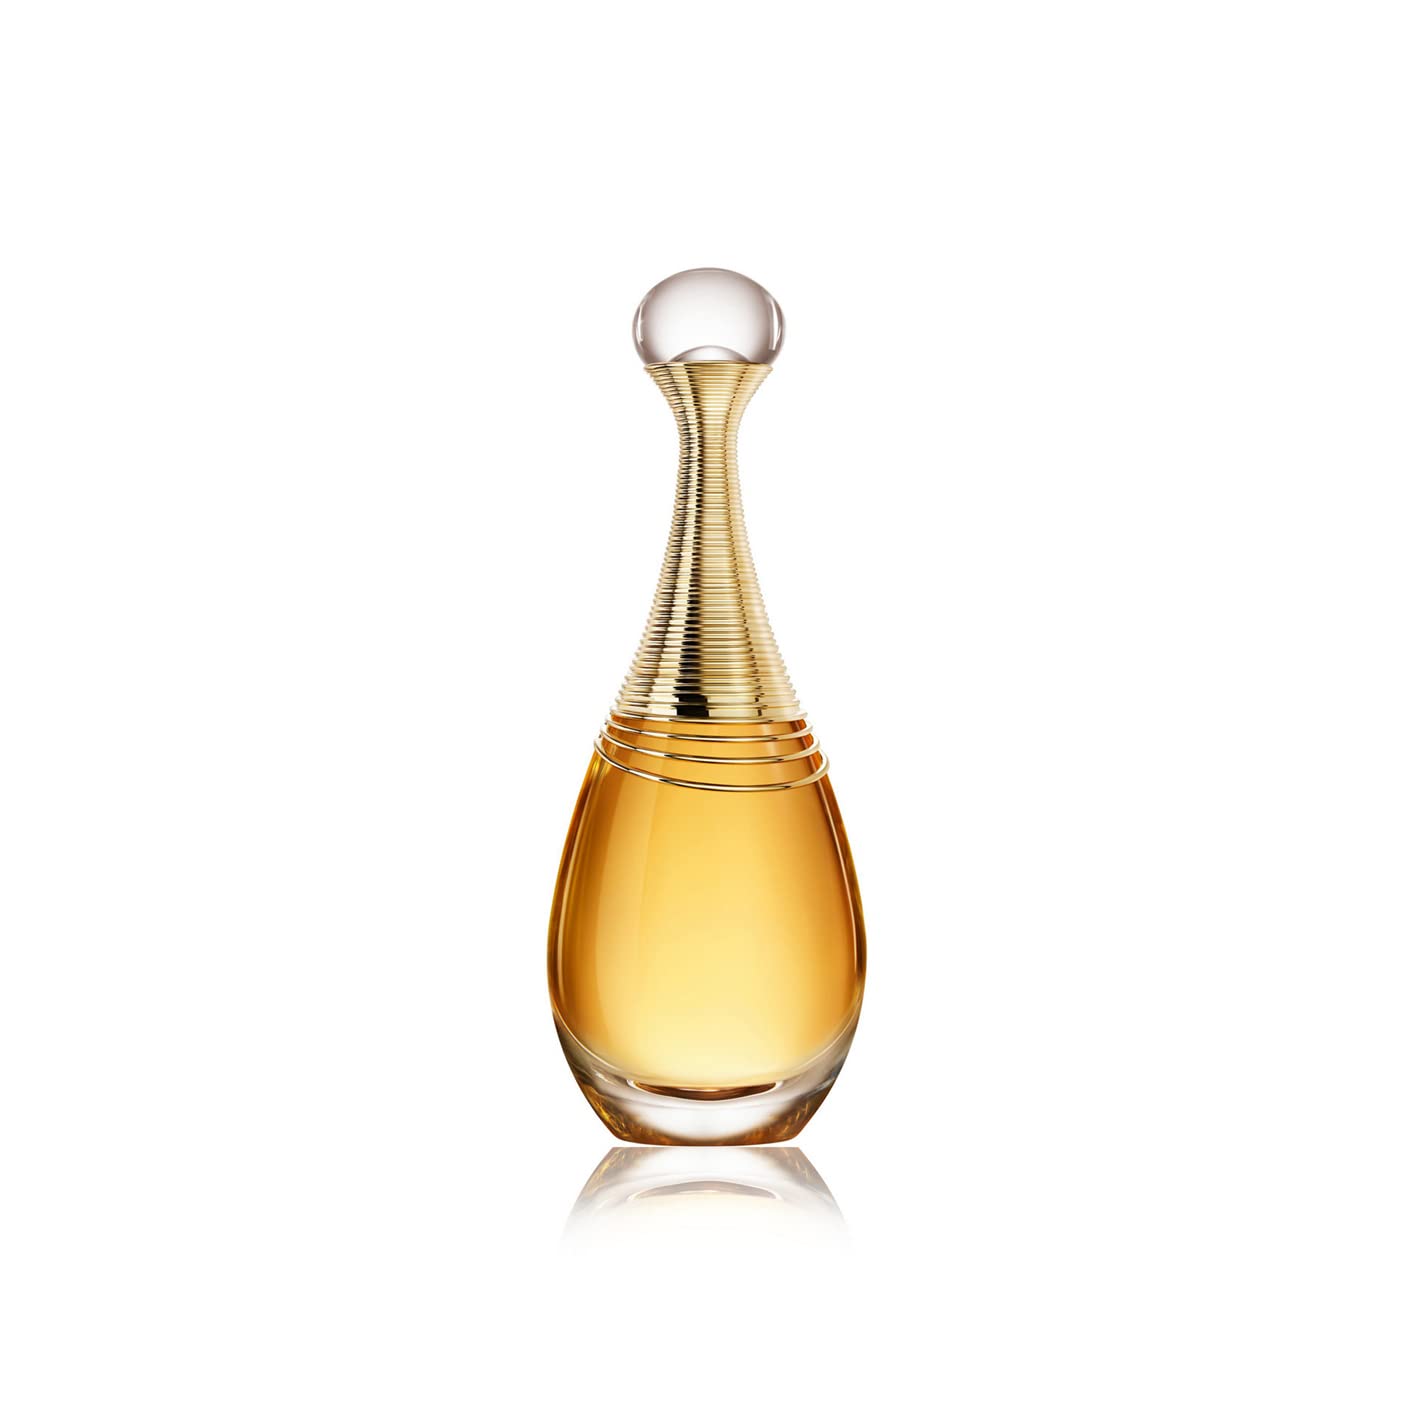 Pink Macaron Victoria&#039;s Secret perfume - a novo